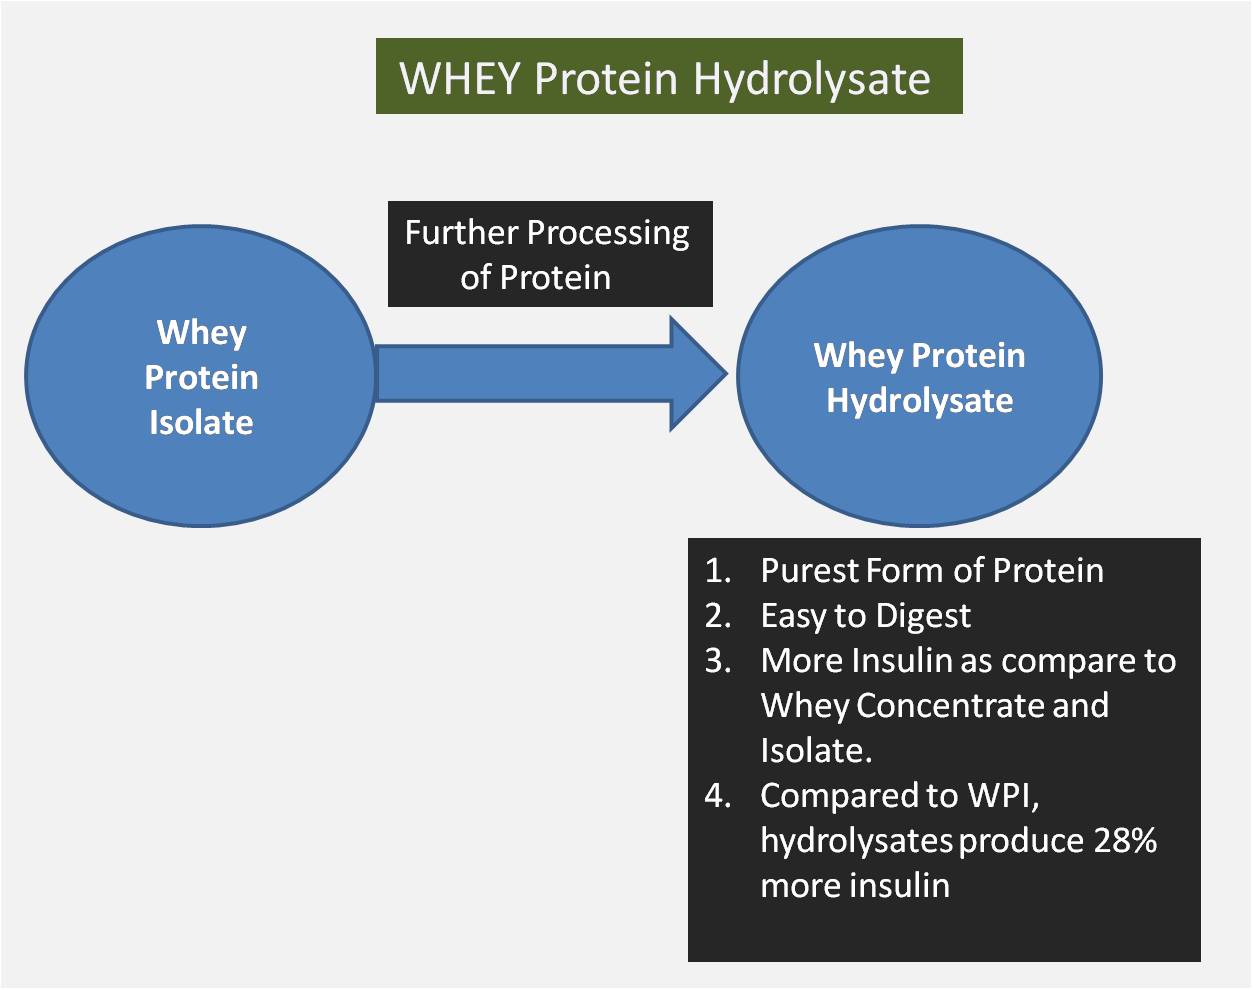 WHEY Protein Hydrolysate